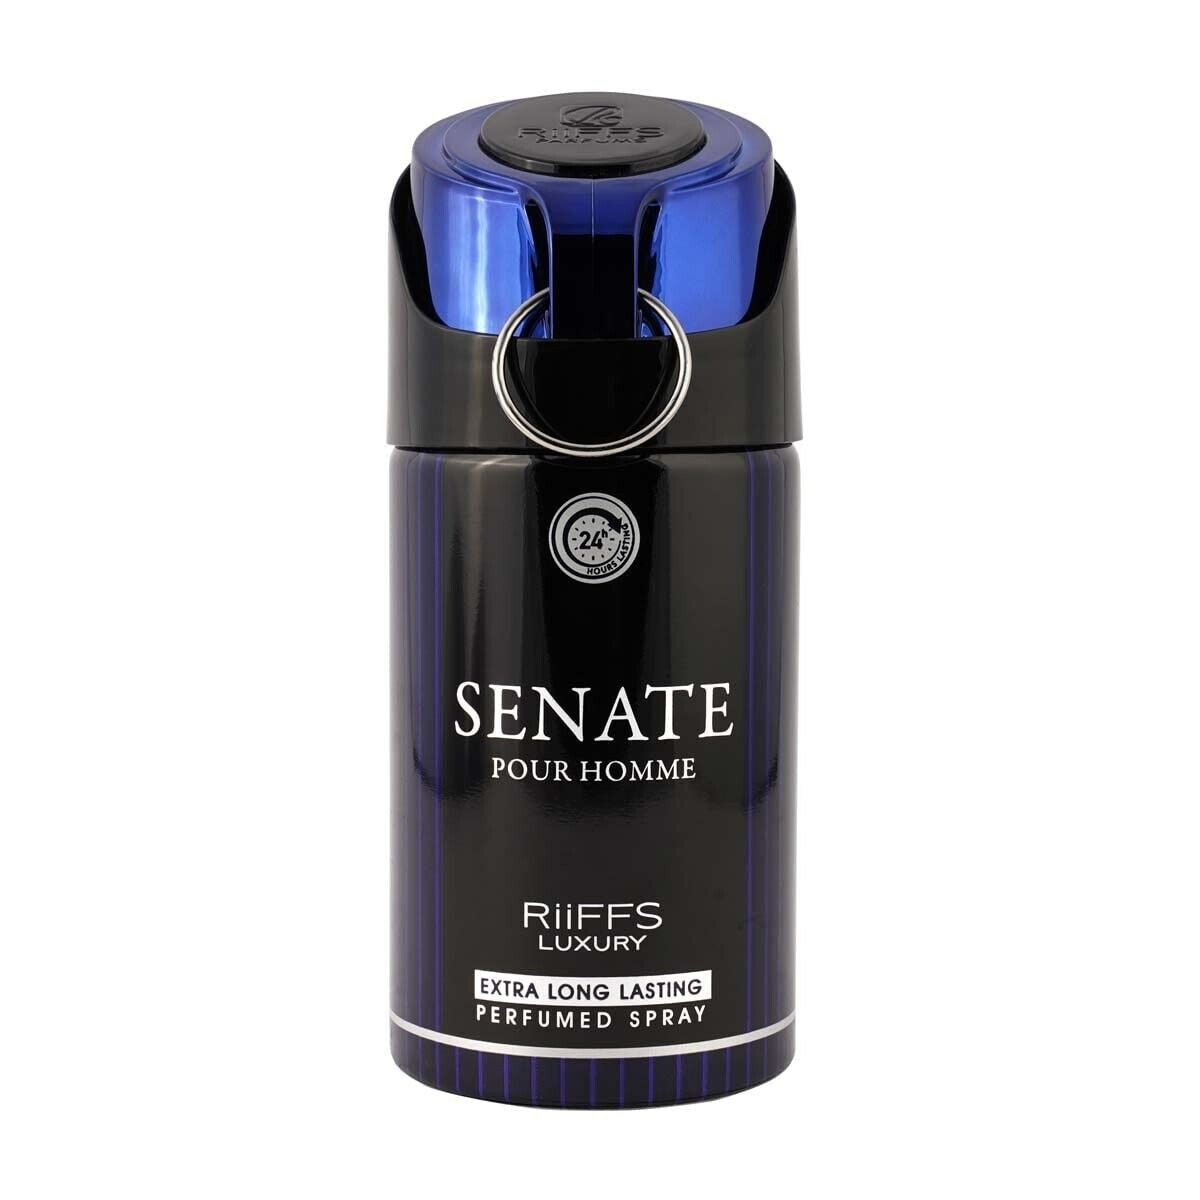 Riiffs Luxury Senate Pour Homme Perfumed Body Spray 250 ML